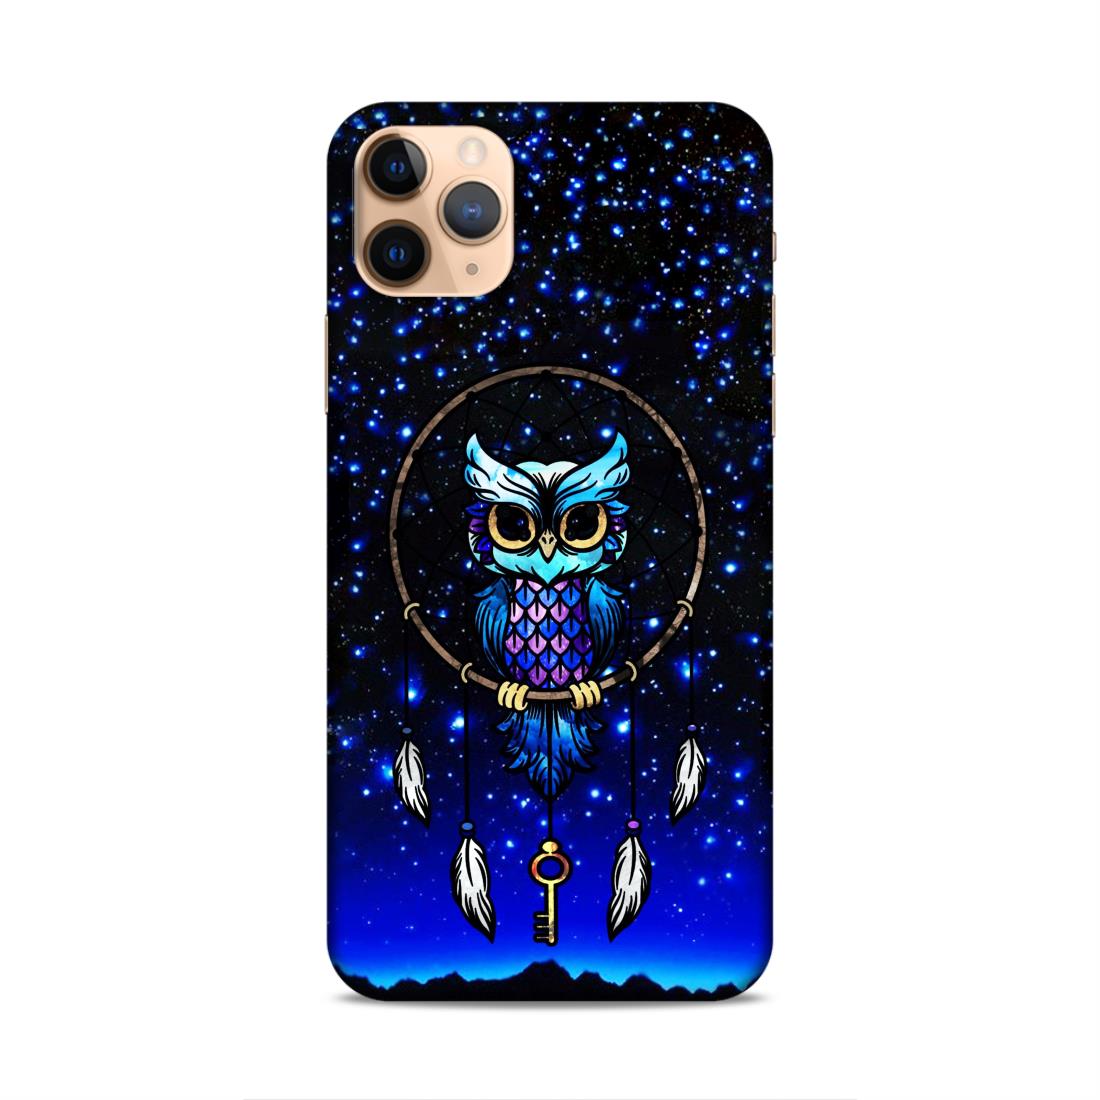 Dreamcatcher Owl Hard Back Case For Apple iPhone 11 Pro